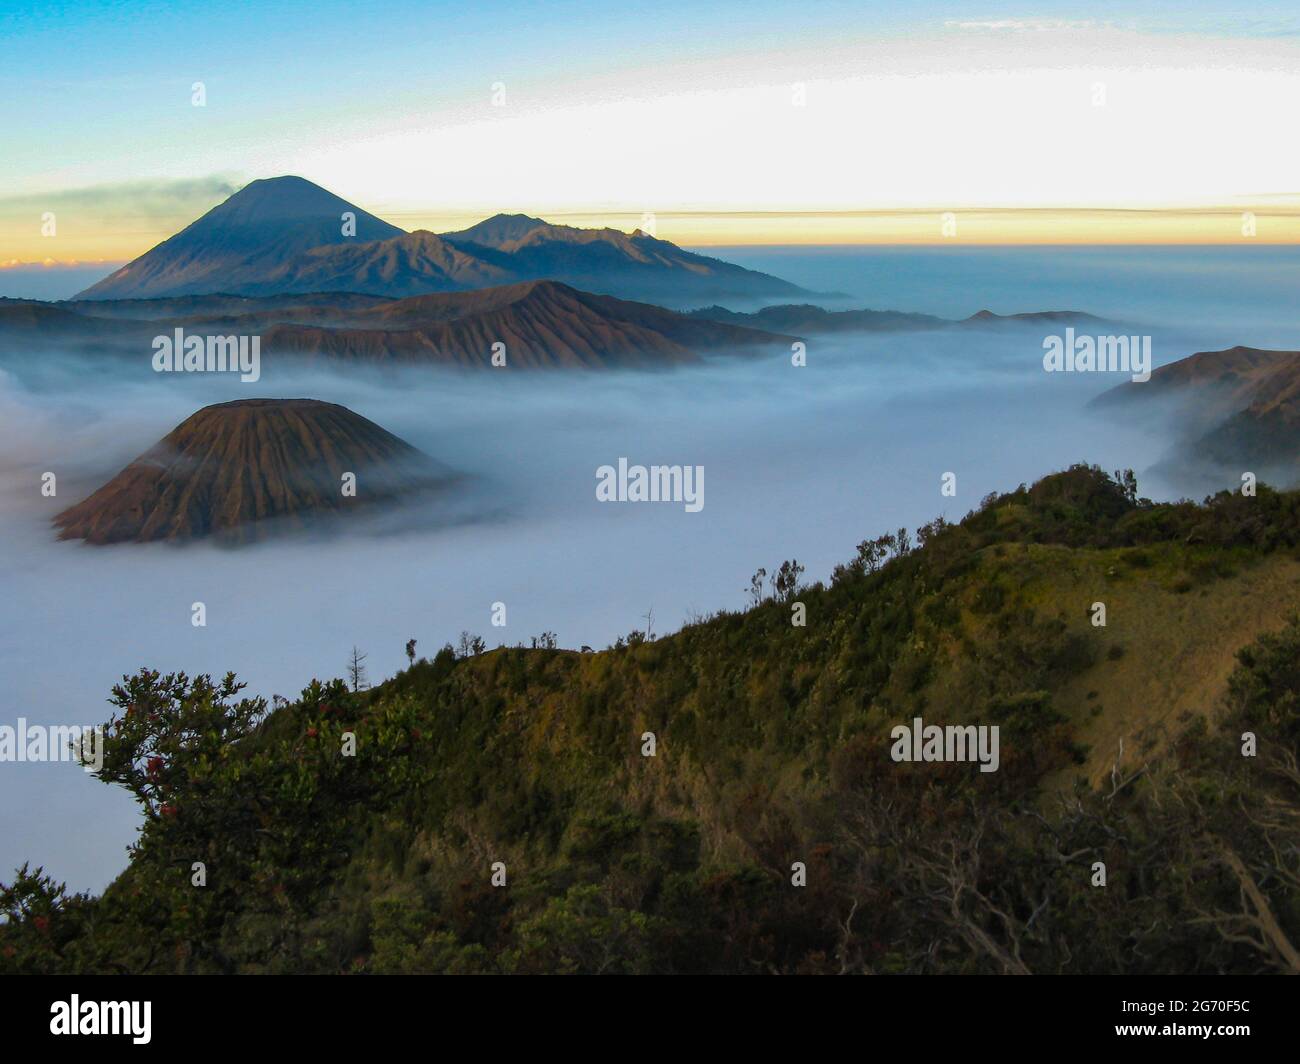 volkano Mount Bromo, Indonesia, in sunrise Stock Photo